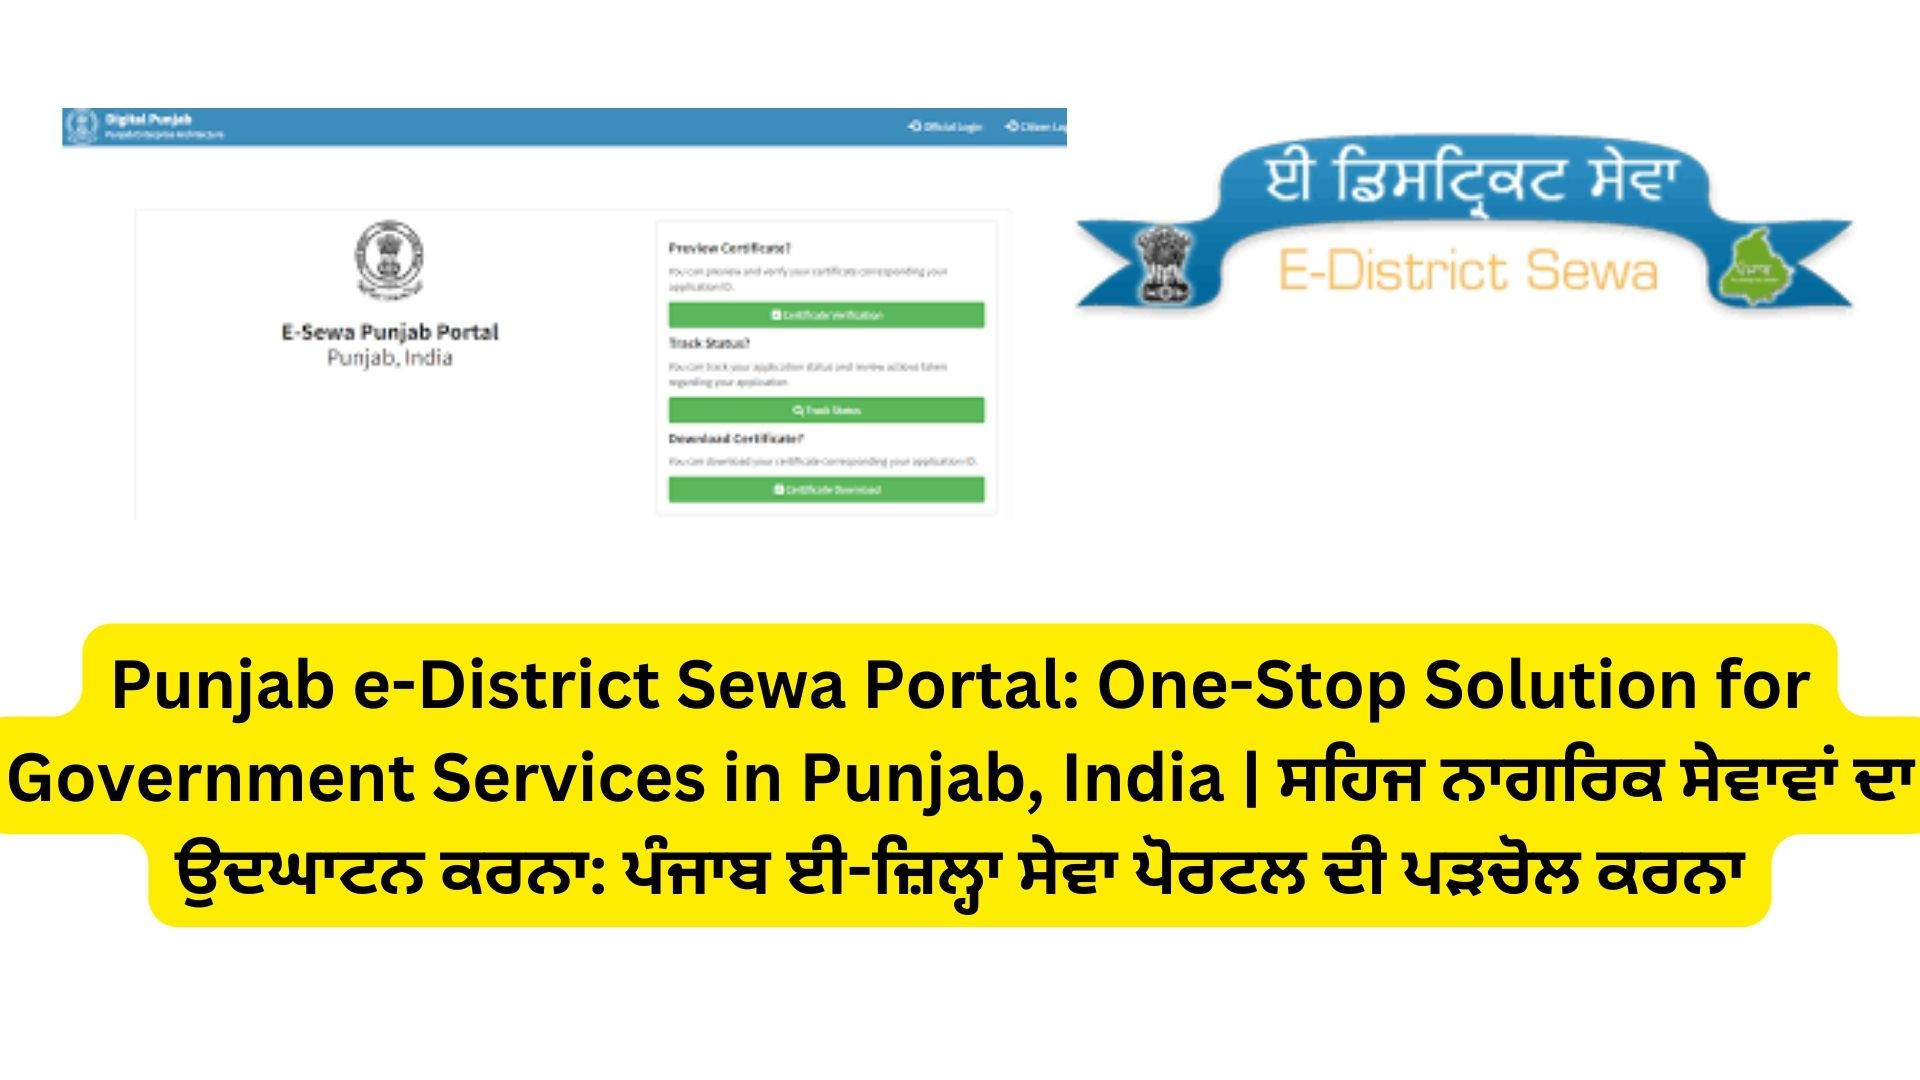 Punjab e-District Sewa Portal: One-Stop Solution for Government Services in Punjab, India | ਸਹਿਜ ਨਾਗਰਿਕ ਸੇਵਾਵਾਂ ਦਾ ਉਦਘਾਟਨ ਕਰਨਾ: ਪੰਜਾਬ ਈ-ਜ਼ਿਲ੍ਹਾ ਸੇਵਾ ਪੋਰਟਲ ਦੀ ਪੜਚੋਲ ਕਰਨਾ